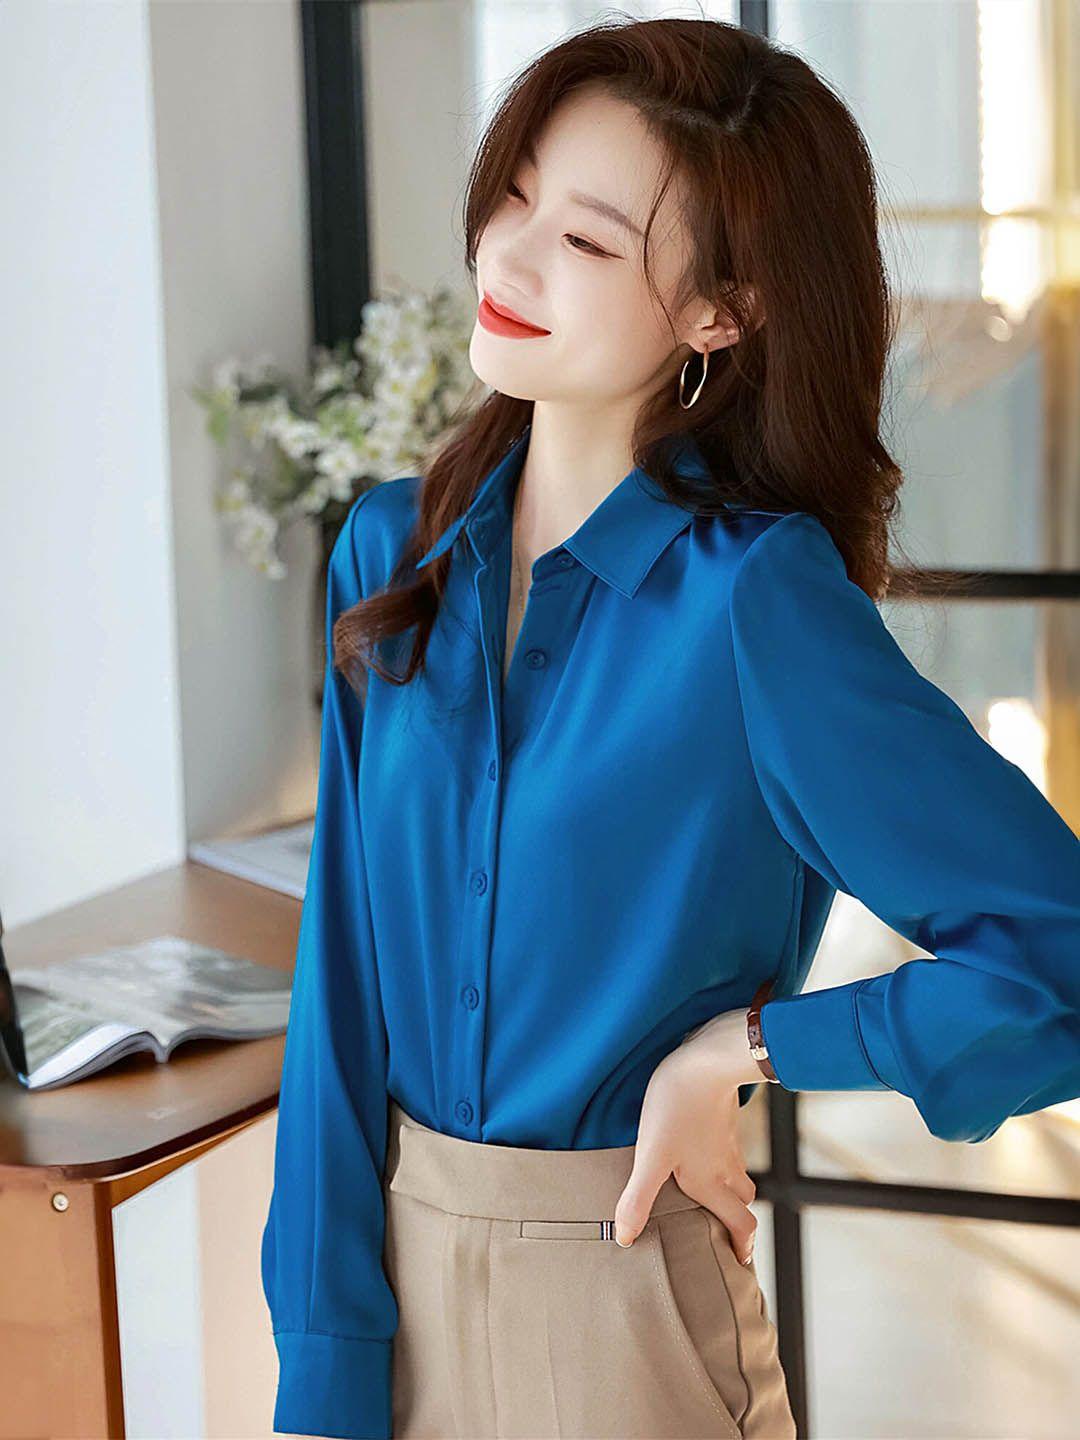 lulu & sky blue shirt style top